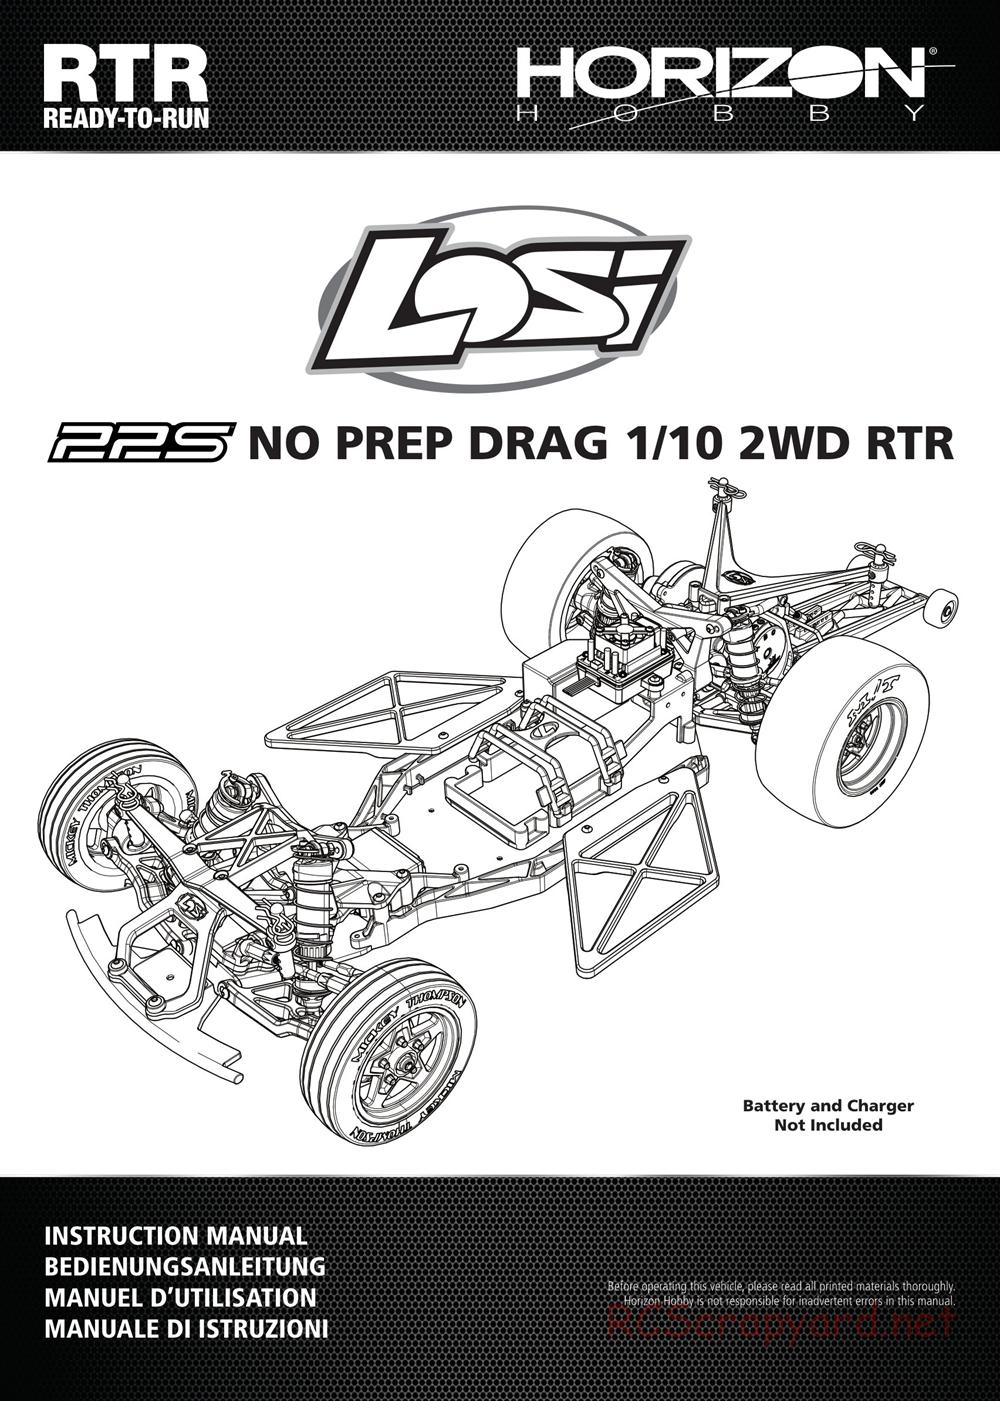 Team Losi - 22S - 69 Camaro Drag Car - Manual - Page 1